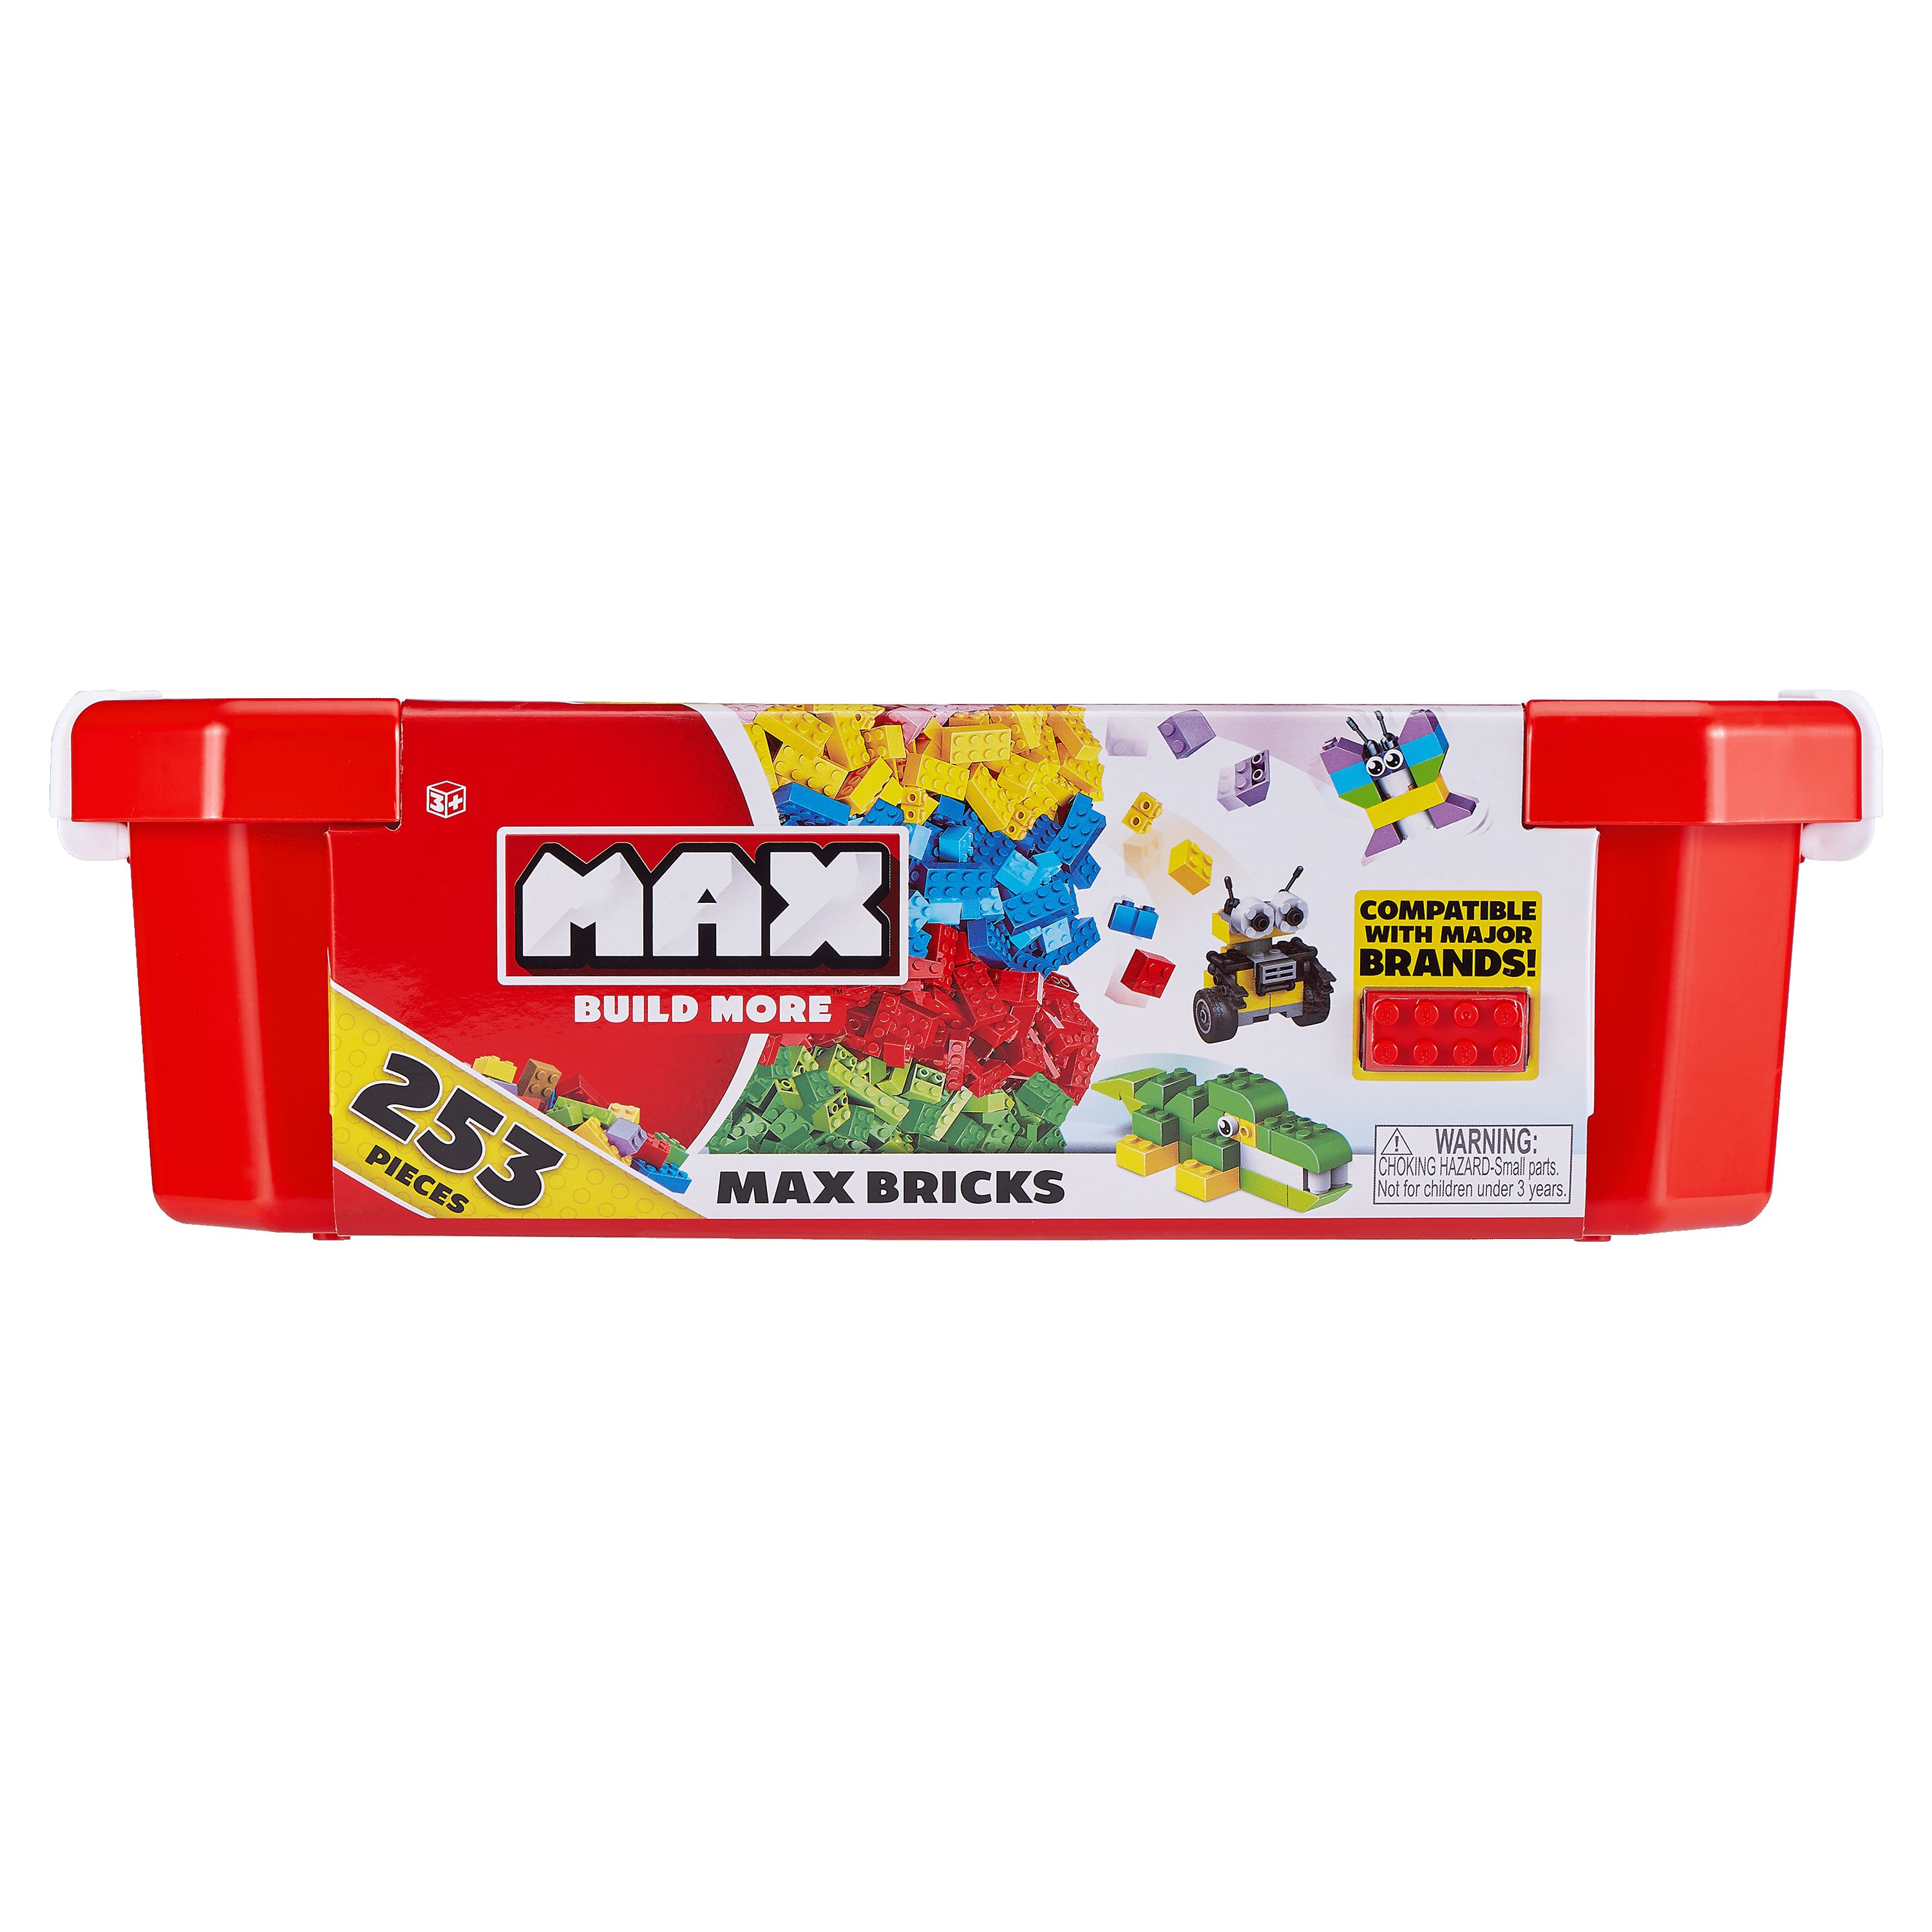 MAX Build More Premium Building Bricks Set (253 Bricks) - Major Brick Brands Compatible - image 1 of 9